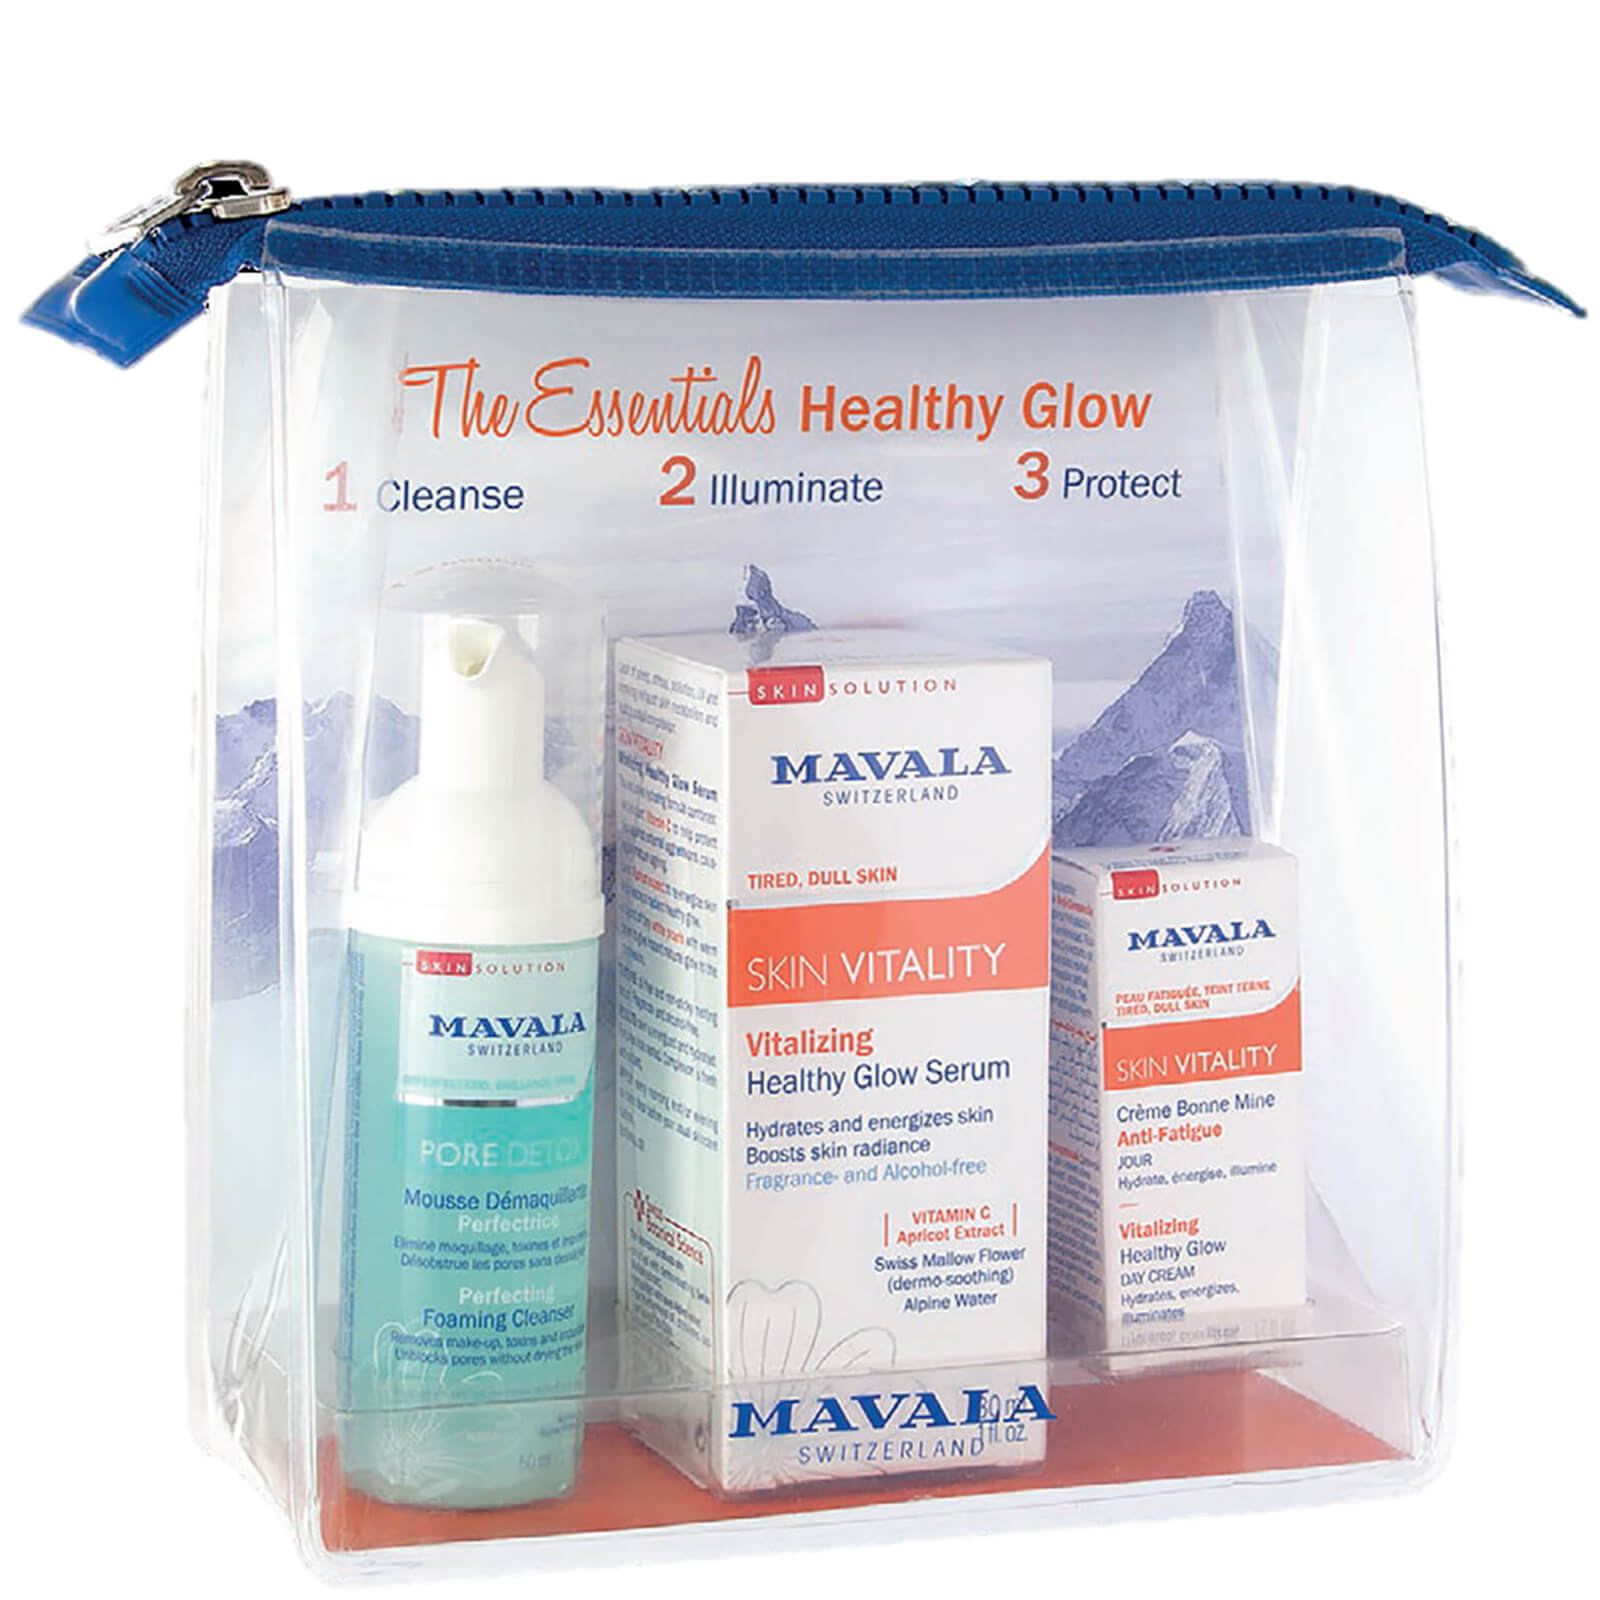 Mavala The Essentials Healthy Glow Set (Worth PS44.14)